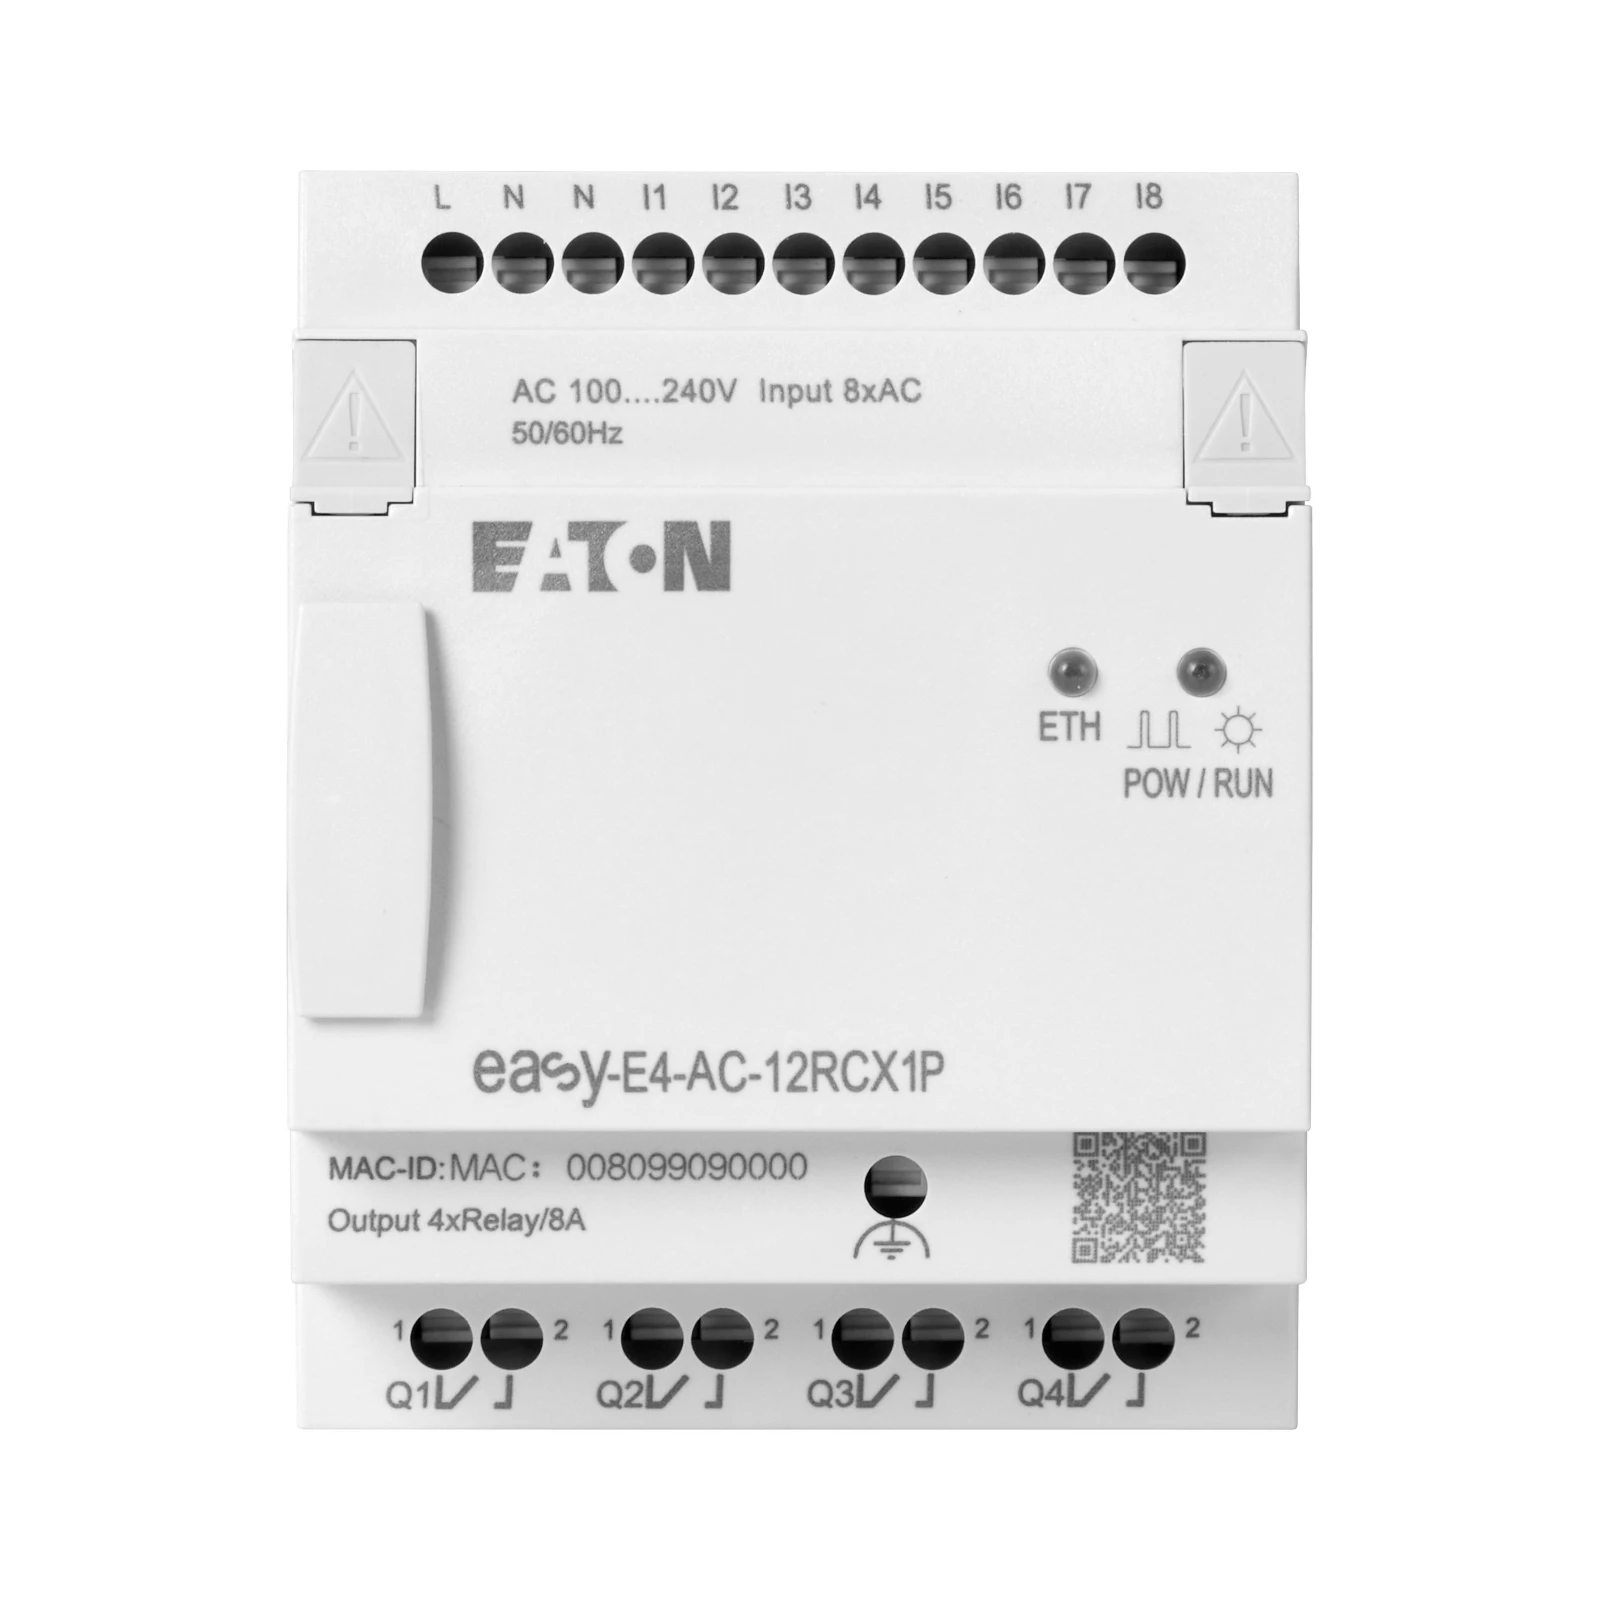 4022328 - Eaton EASY-E4-AC-12RCX1P